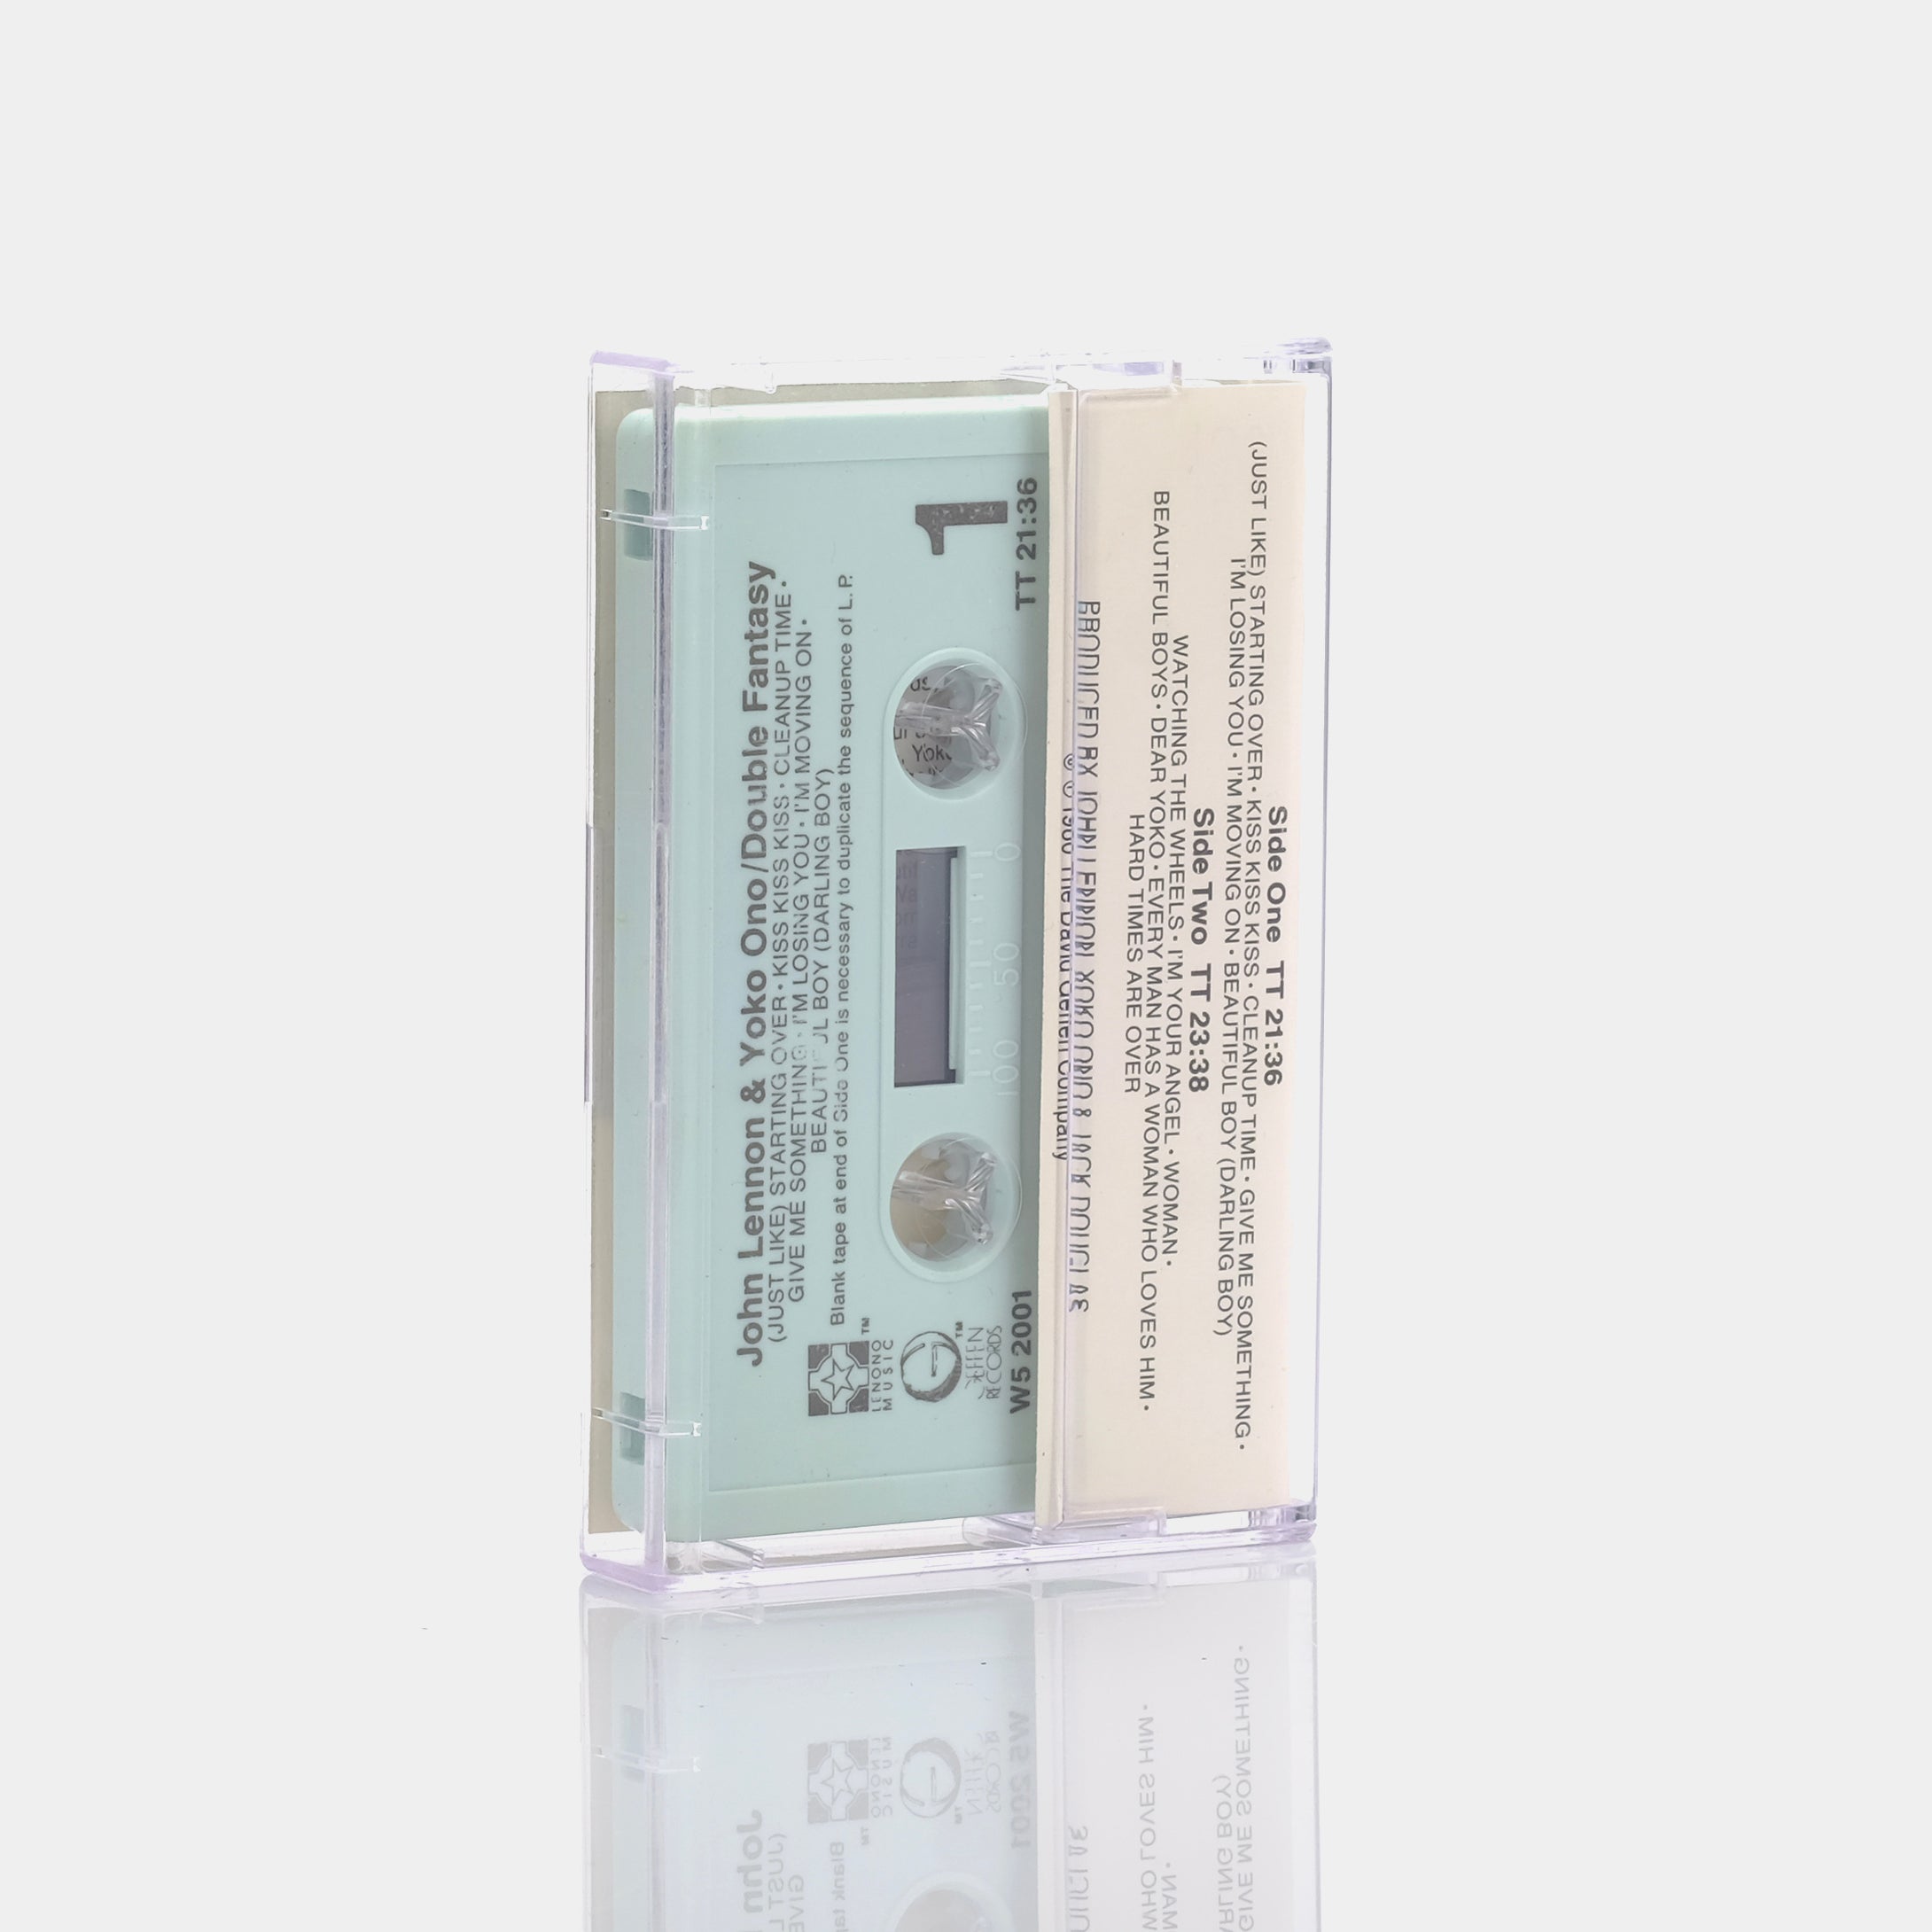 John Lennon & Yoko Ono - Double Fantasy  Cassette Tape